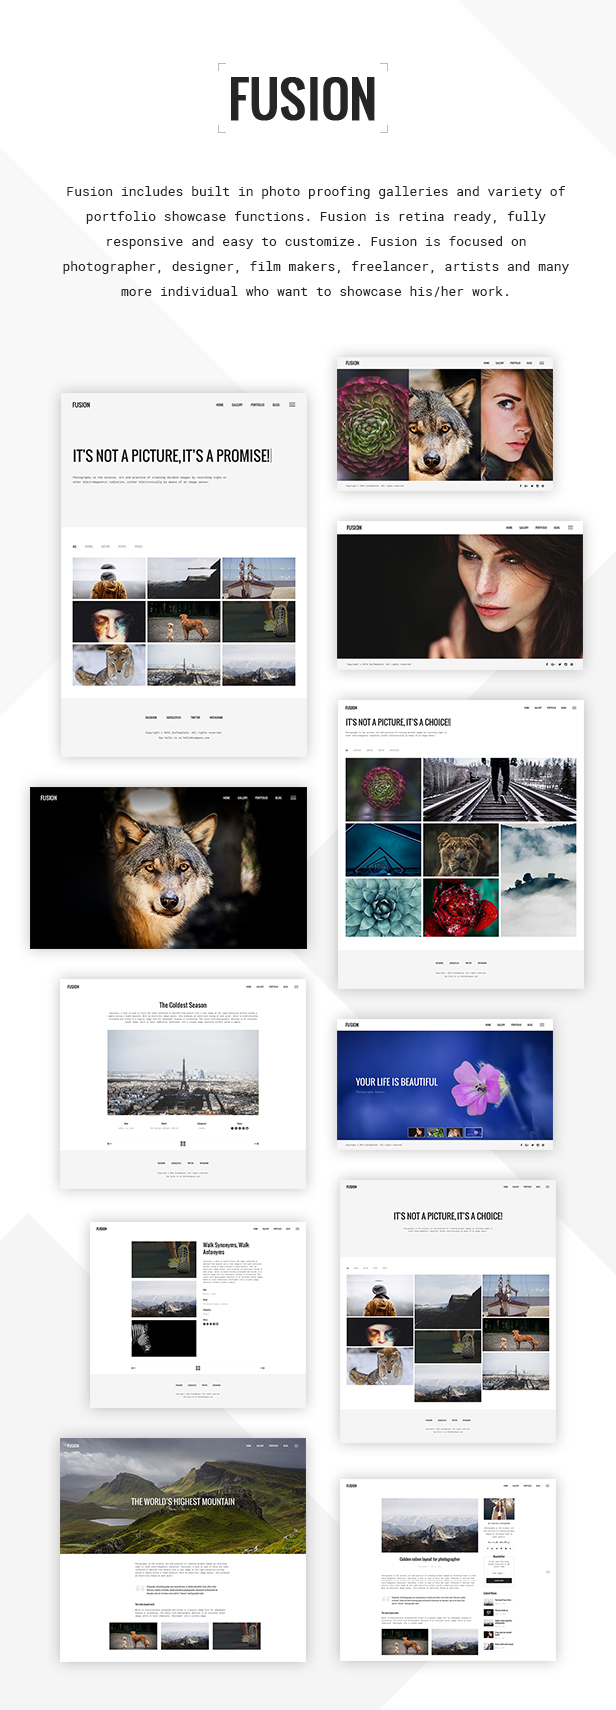 WordPress-Template für Fusion - Responsive Photography & Portfolio